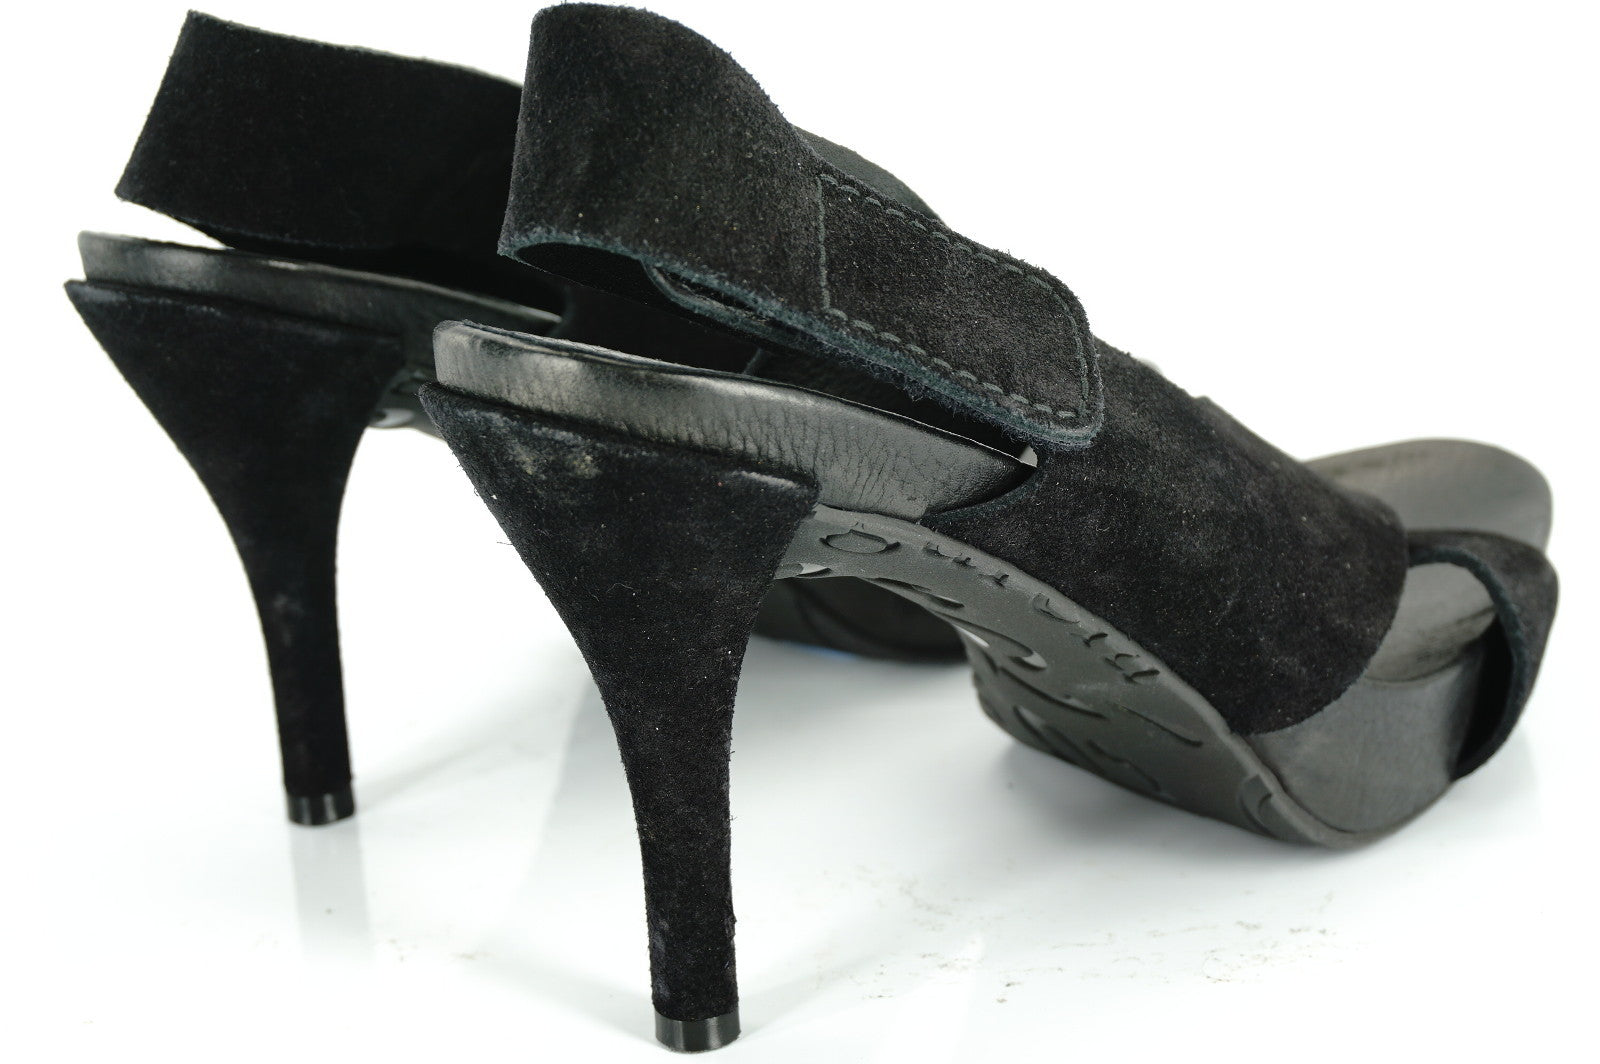 Pedro Garcia Black Suede 'Libby' Slingback Platform Sandals Size 38.5 New $480